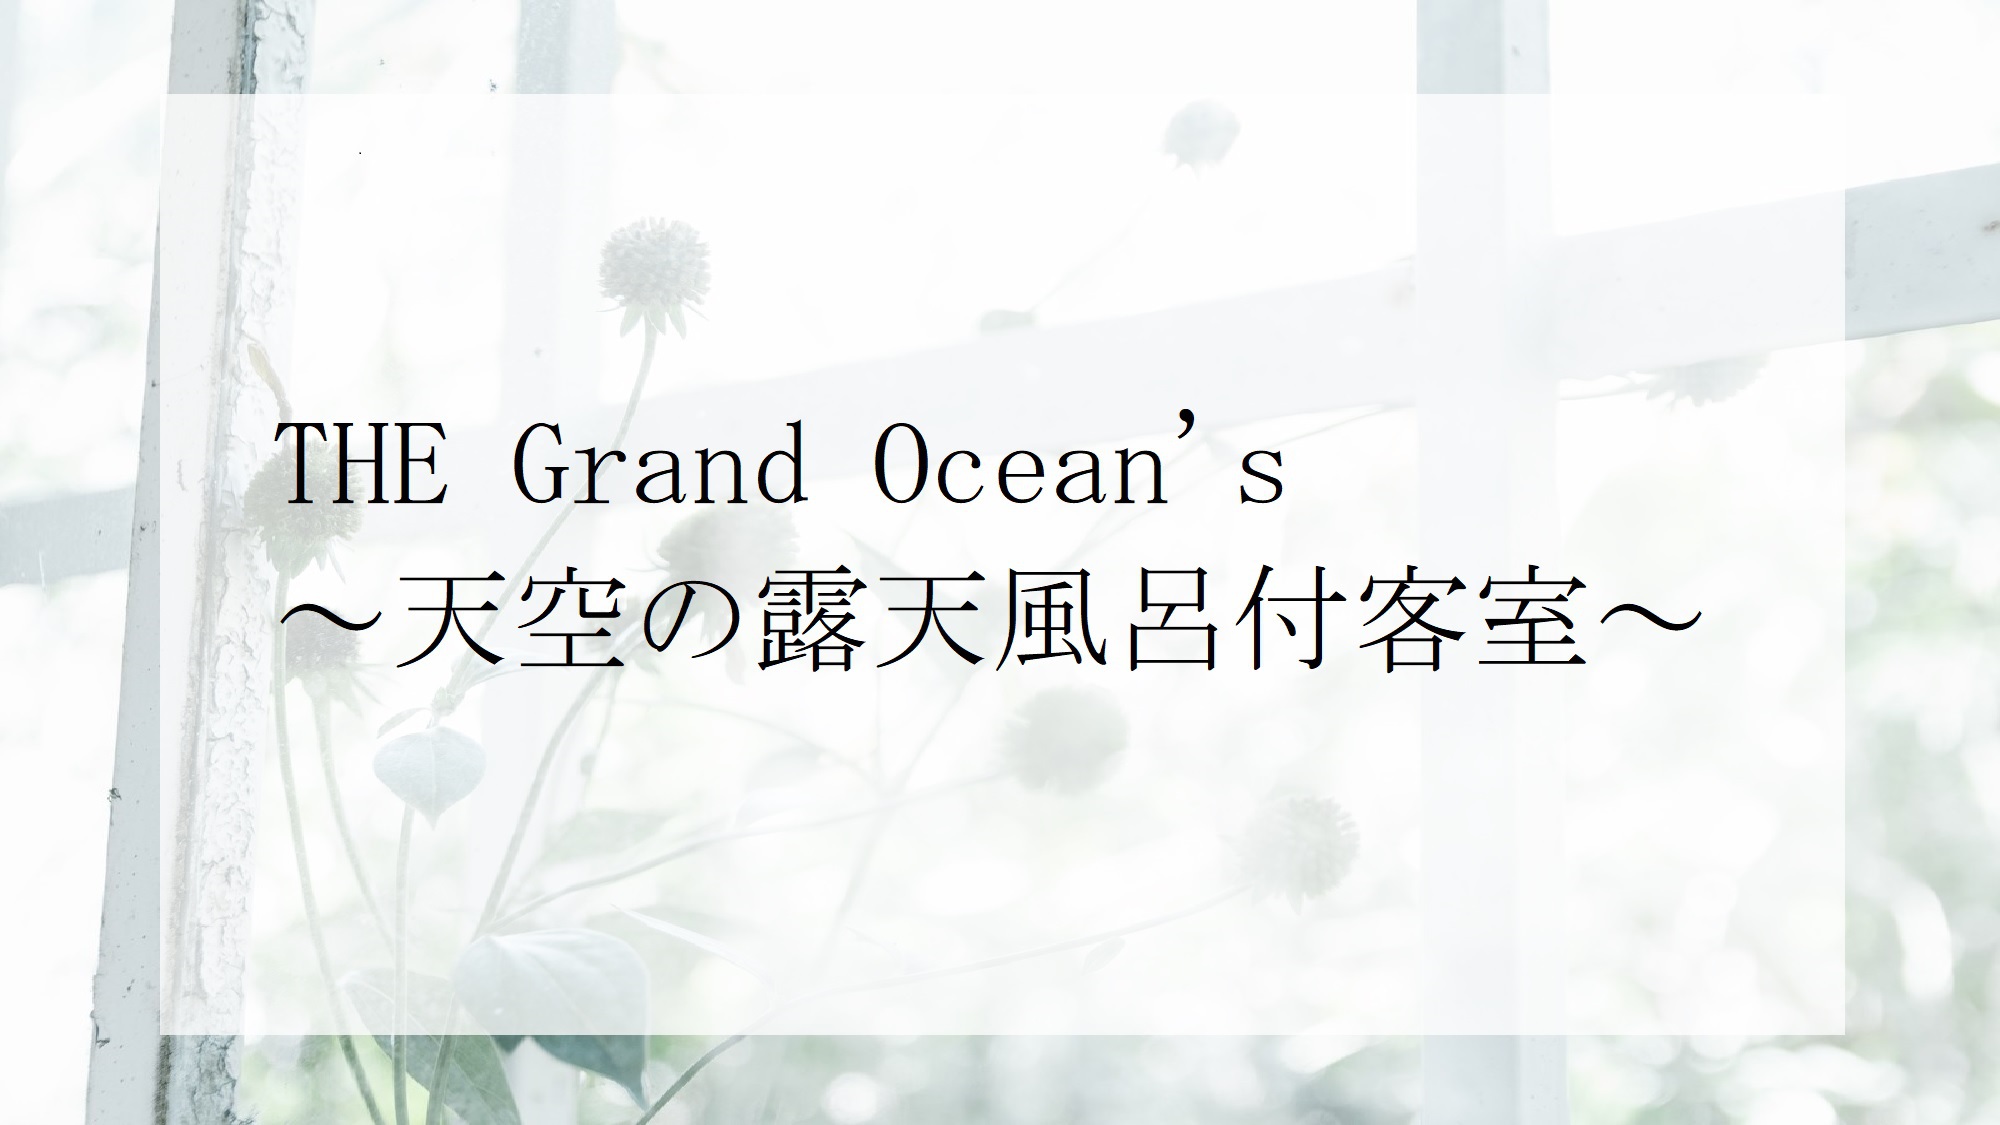 The Grand Ocean’;s